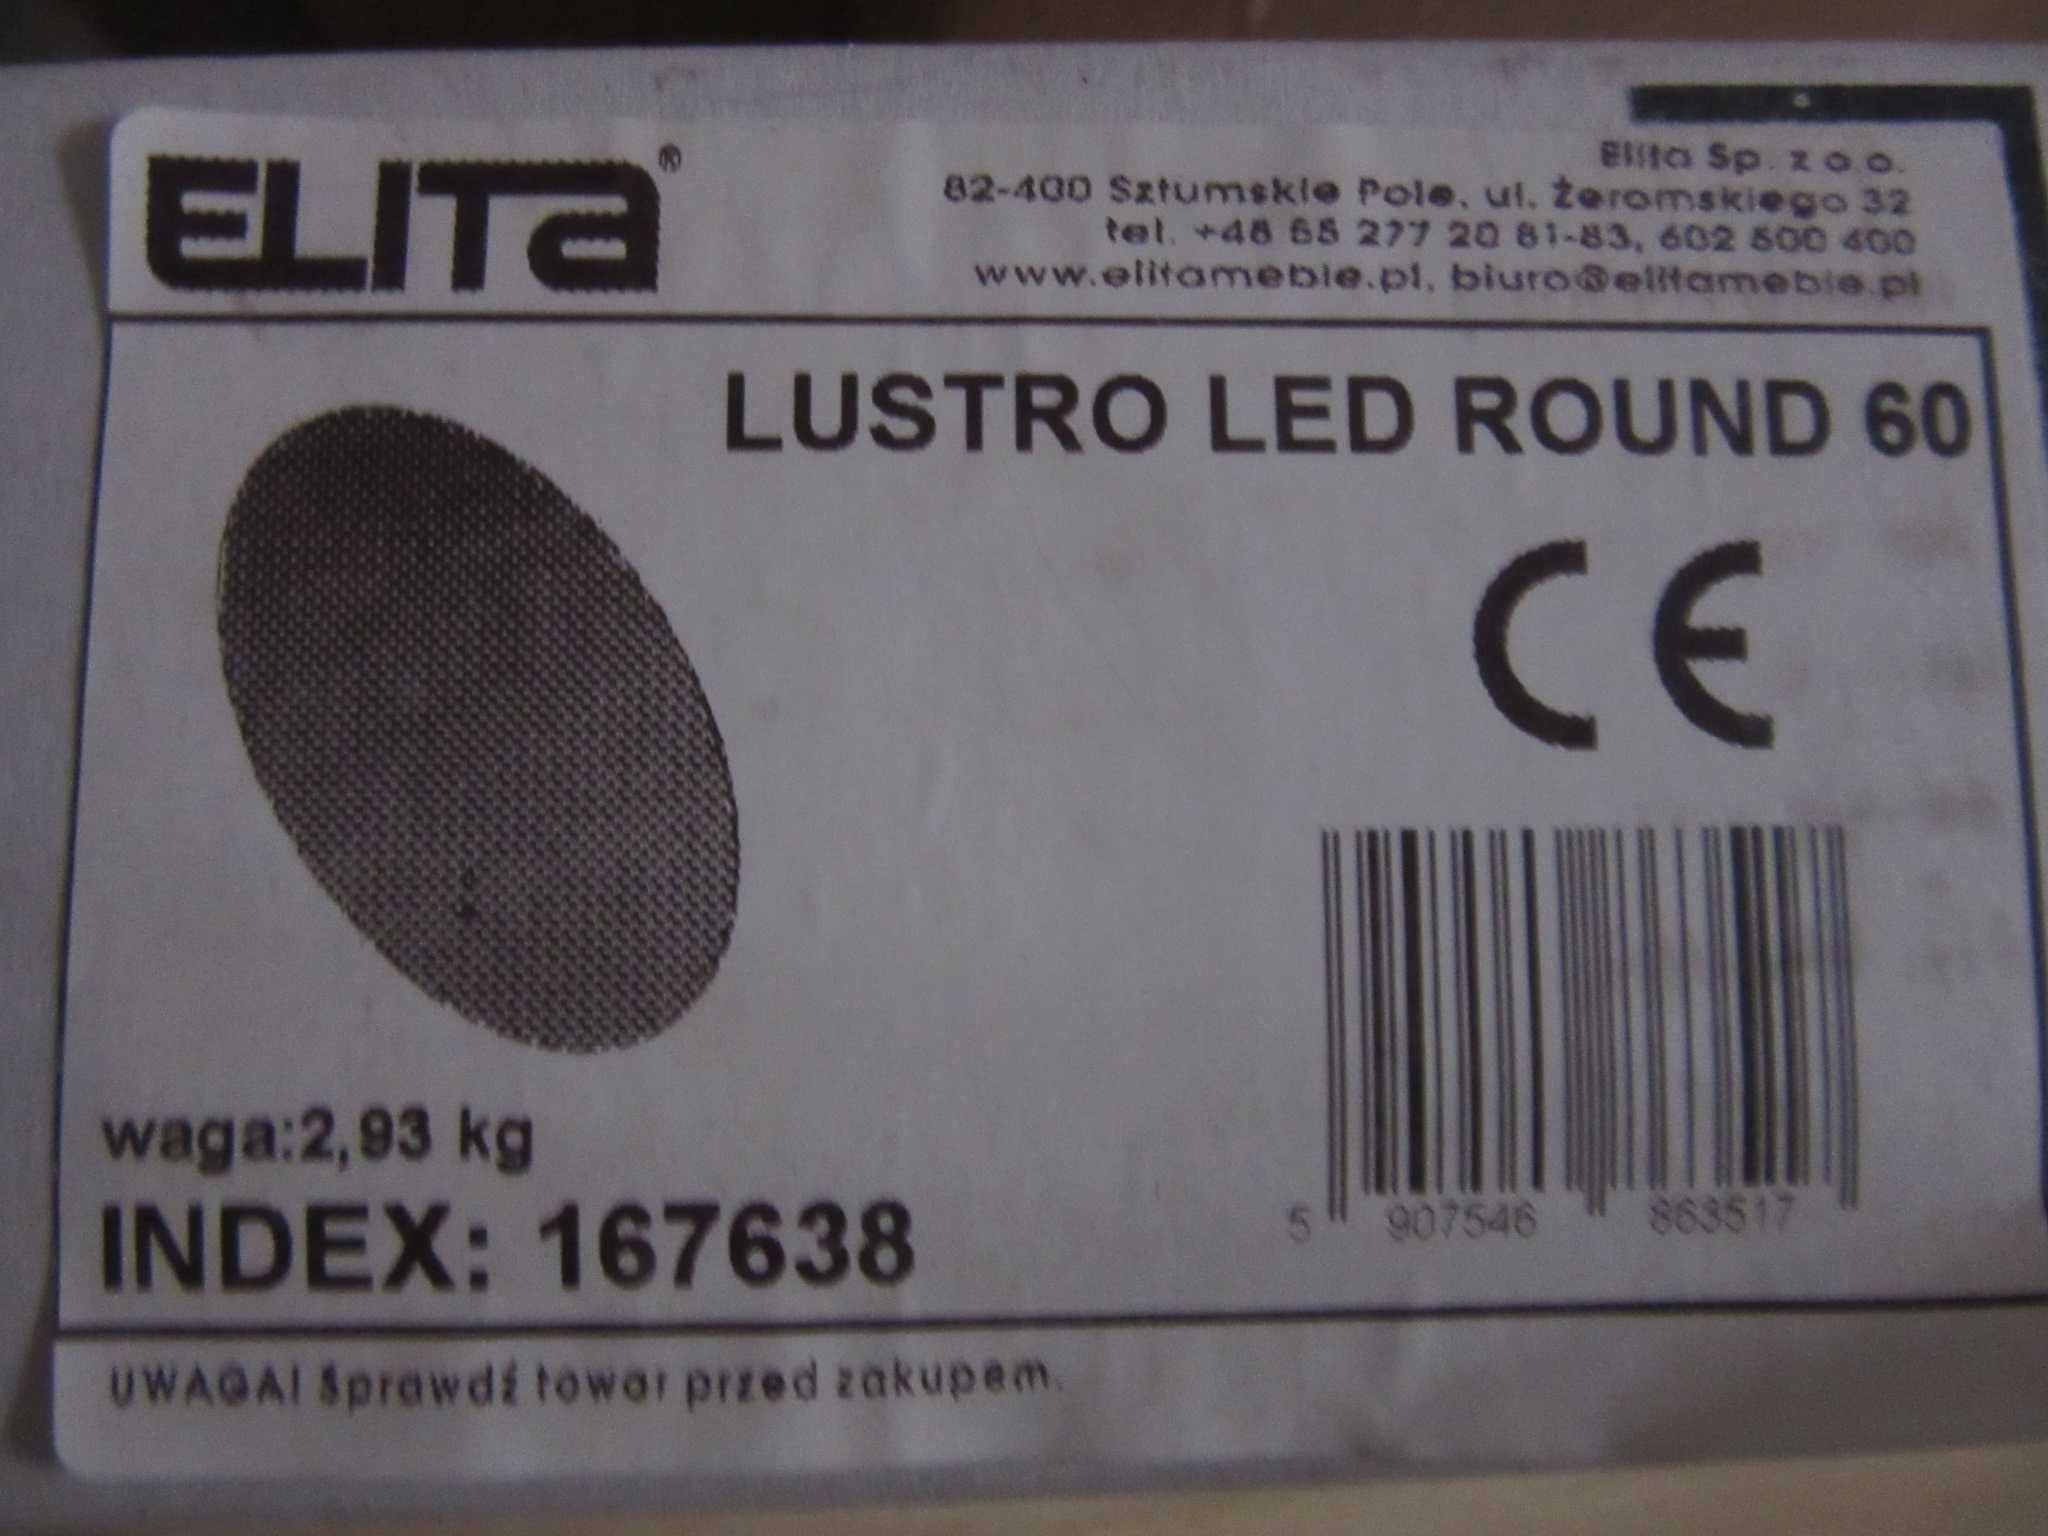 Lustro łazienkowe Elita Round 60 LED